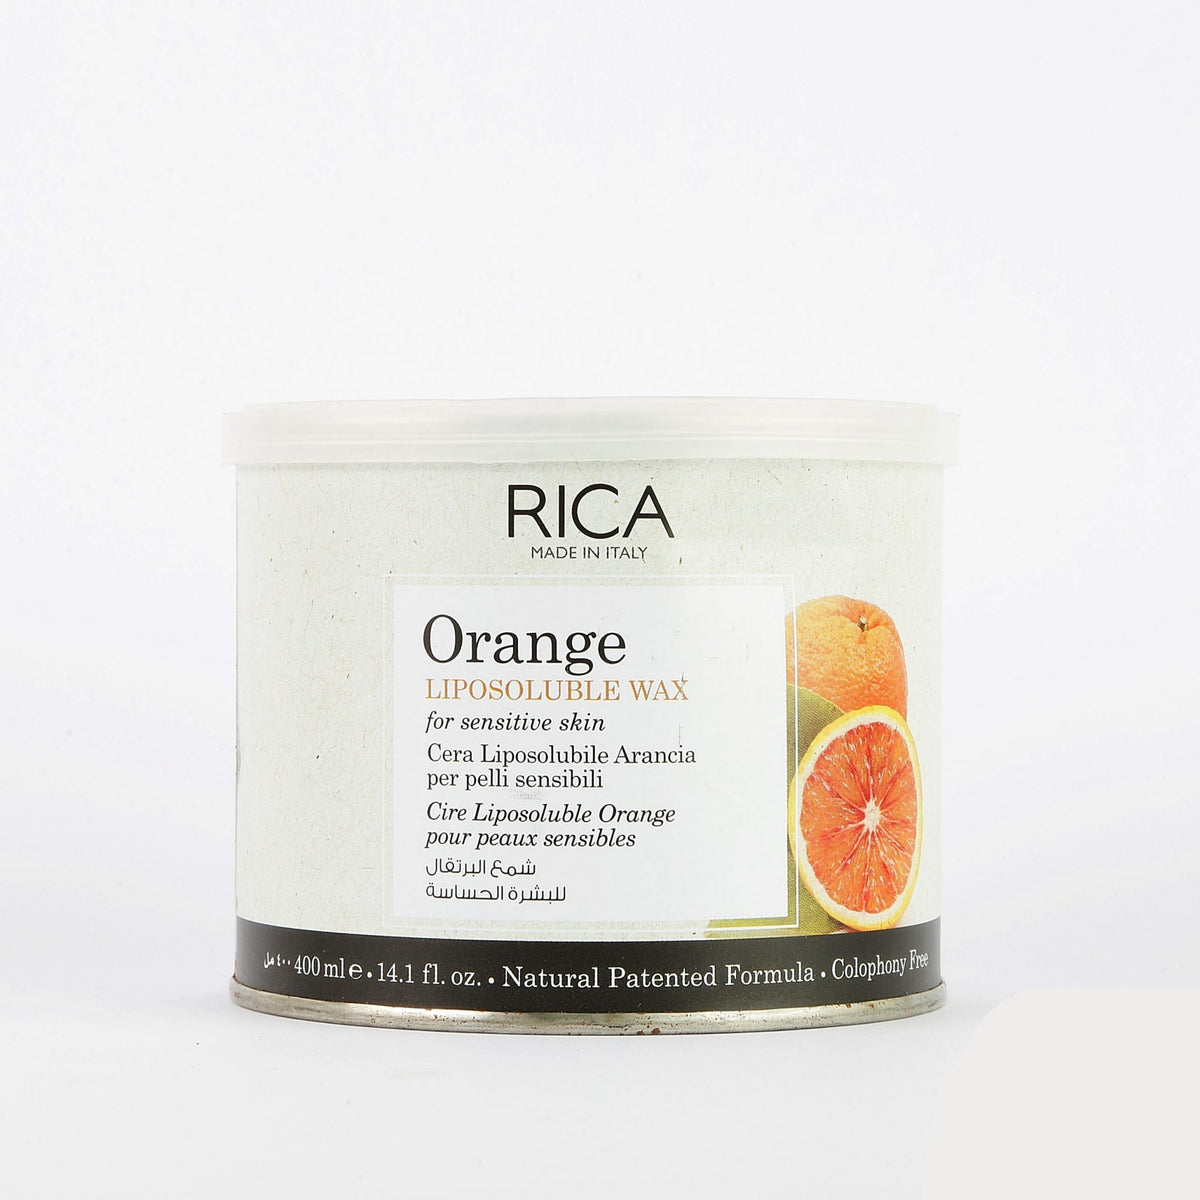 RICA Liposoluble Wax For Sensitive Skin Orange 400ml freeshipping - lasertag.pk